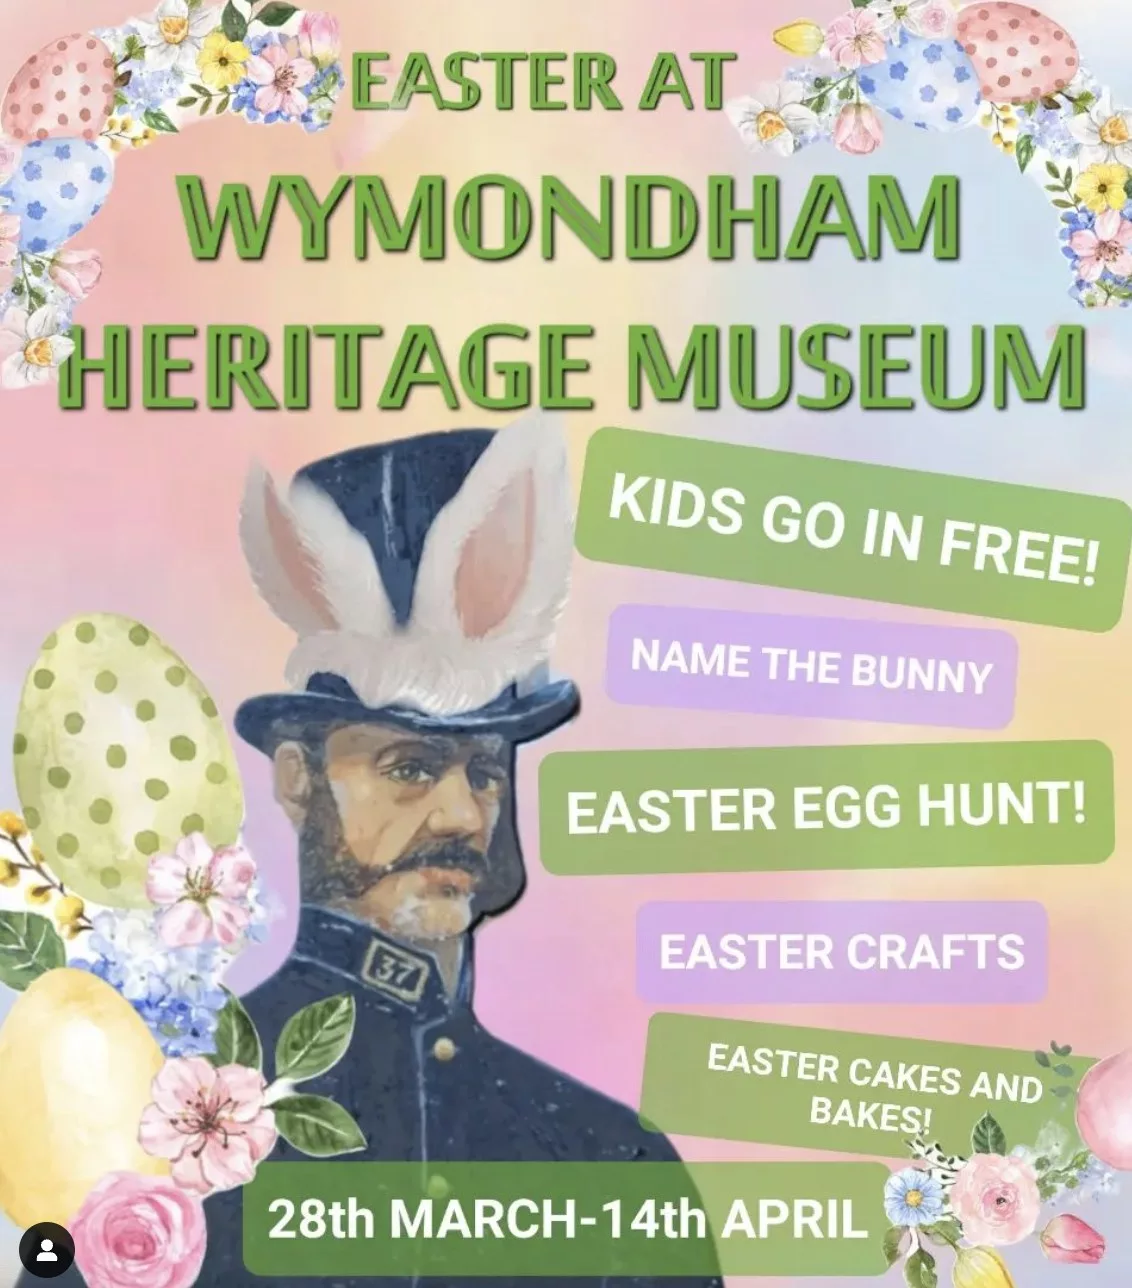 Wymondham Heritage Museum – The Bridewell, Wymondham, Daily until 3rd November